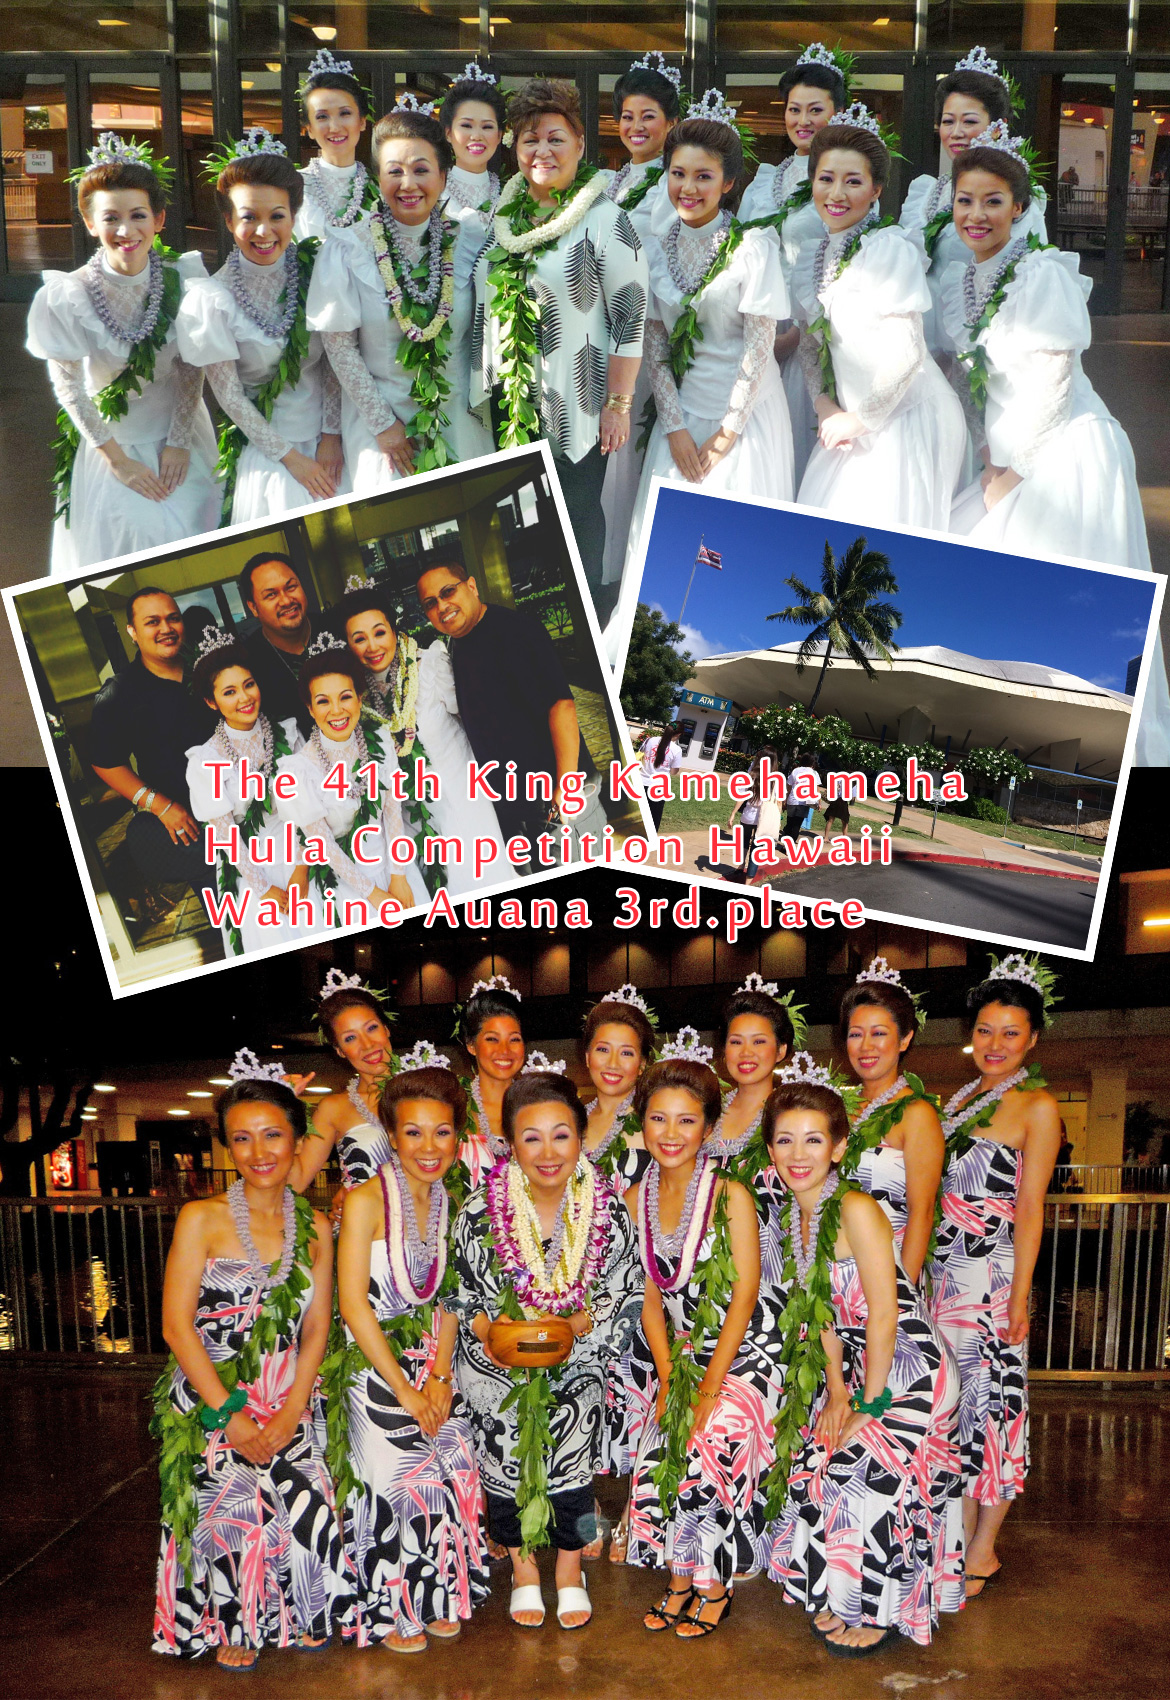 The 41th King Kamehameha Hula Competition Hawaii Wahine Auana 3rd.place